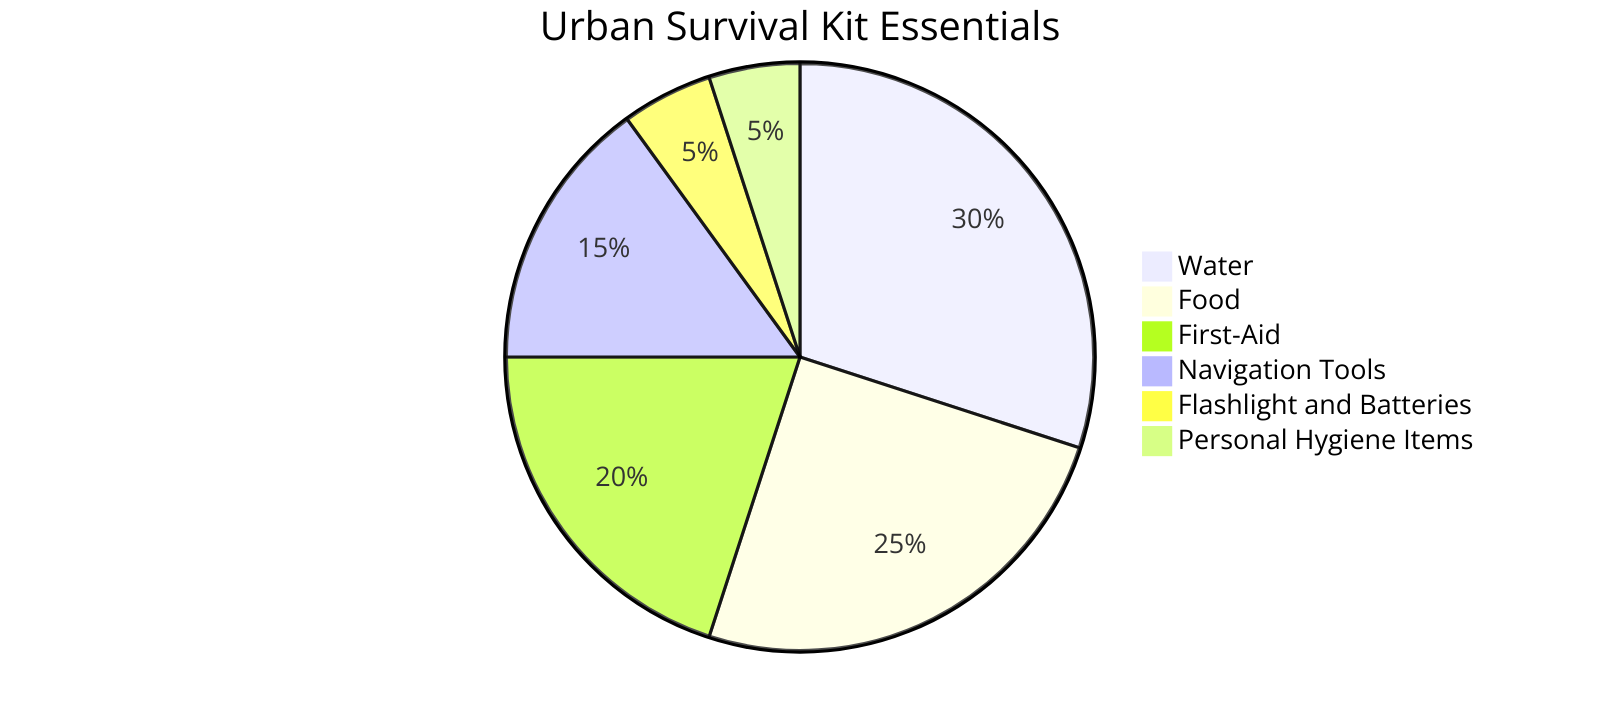 the percentage breakdown of essentials in an urban survival kit